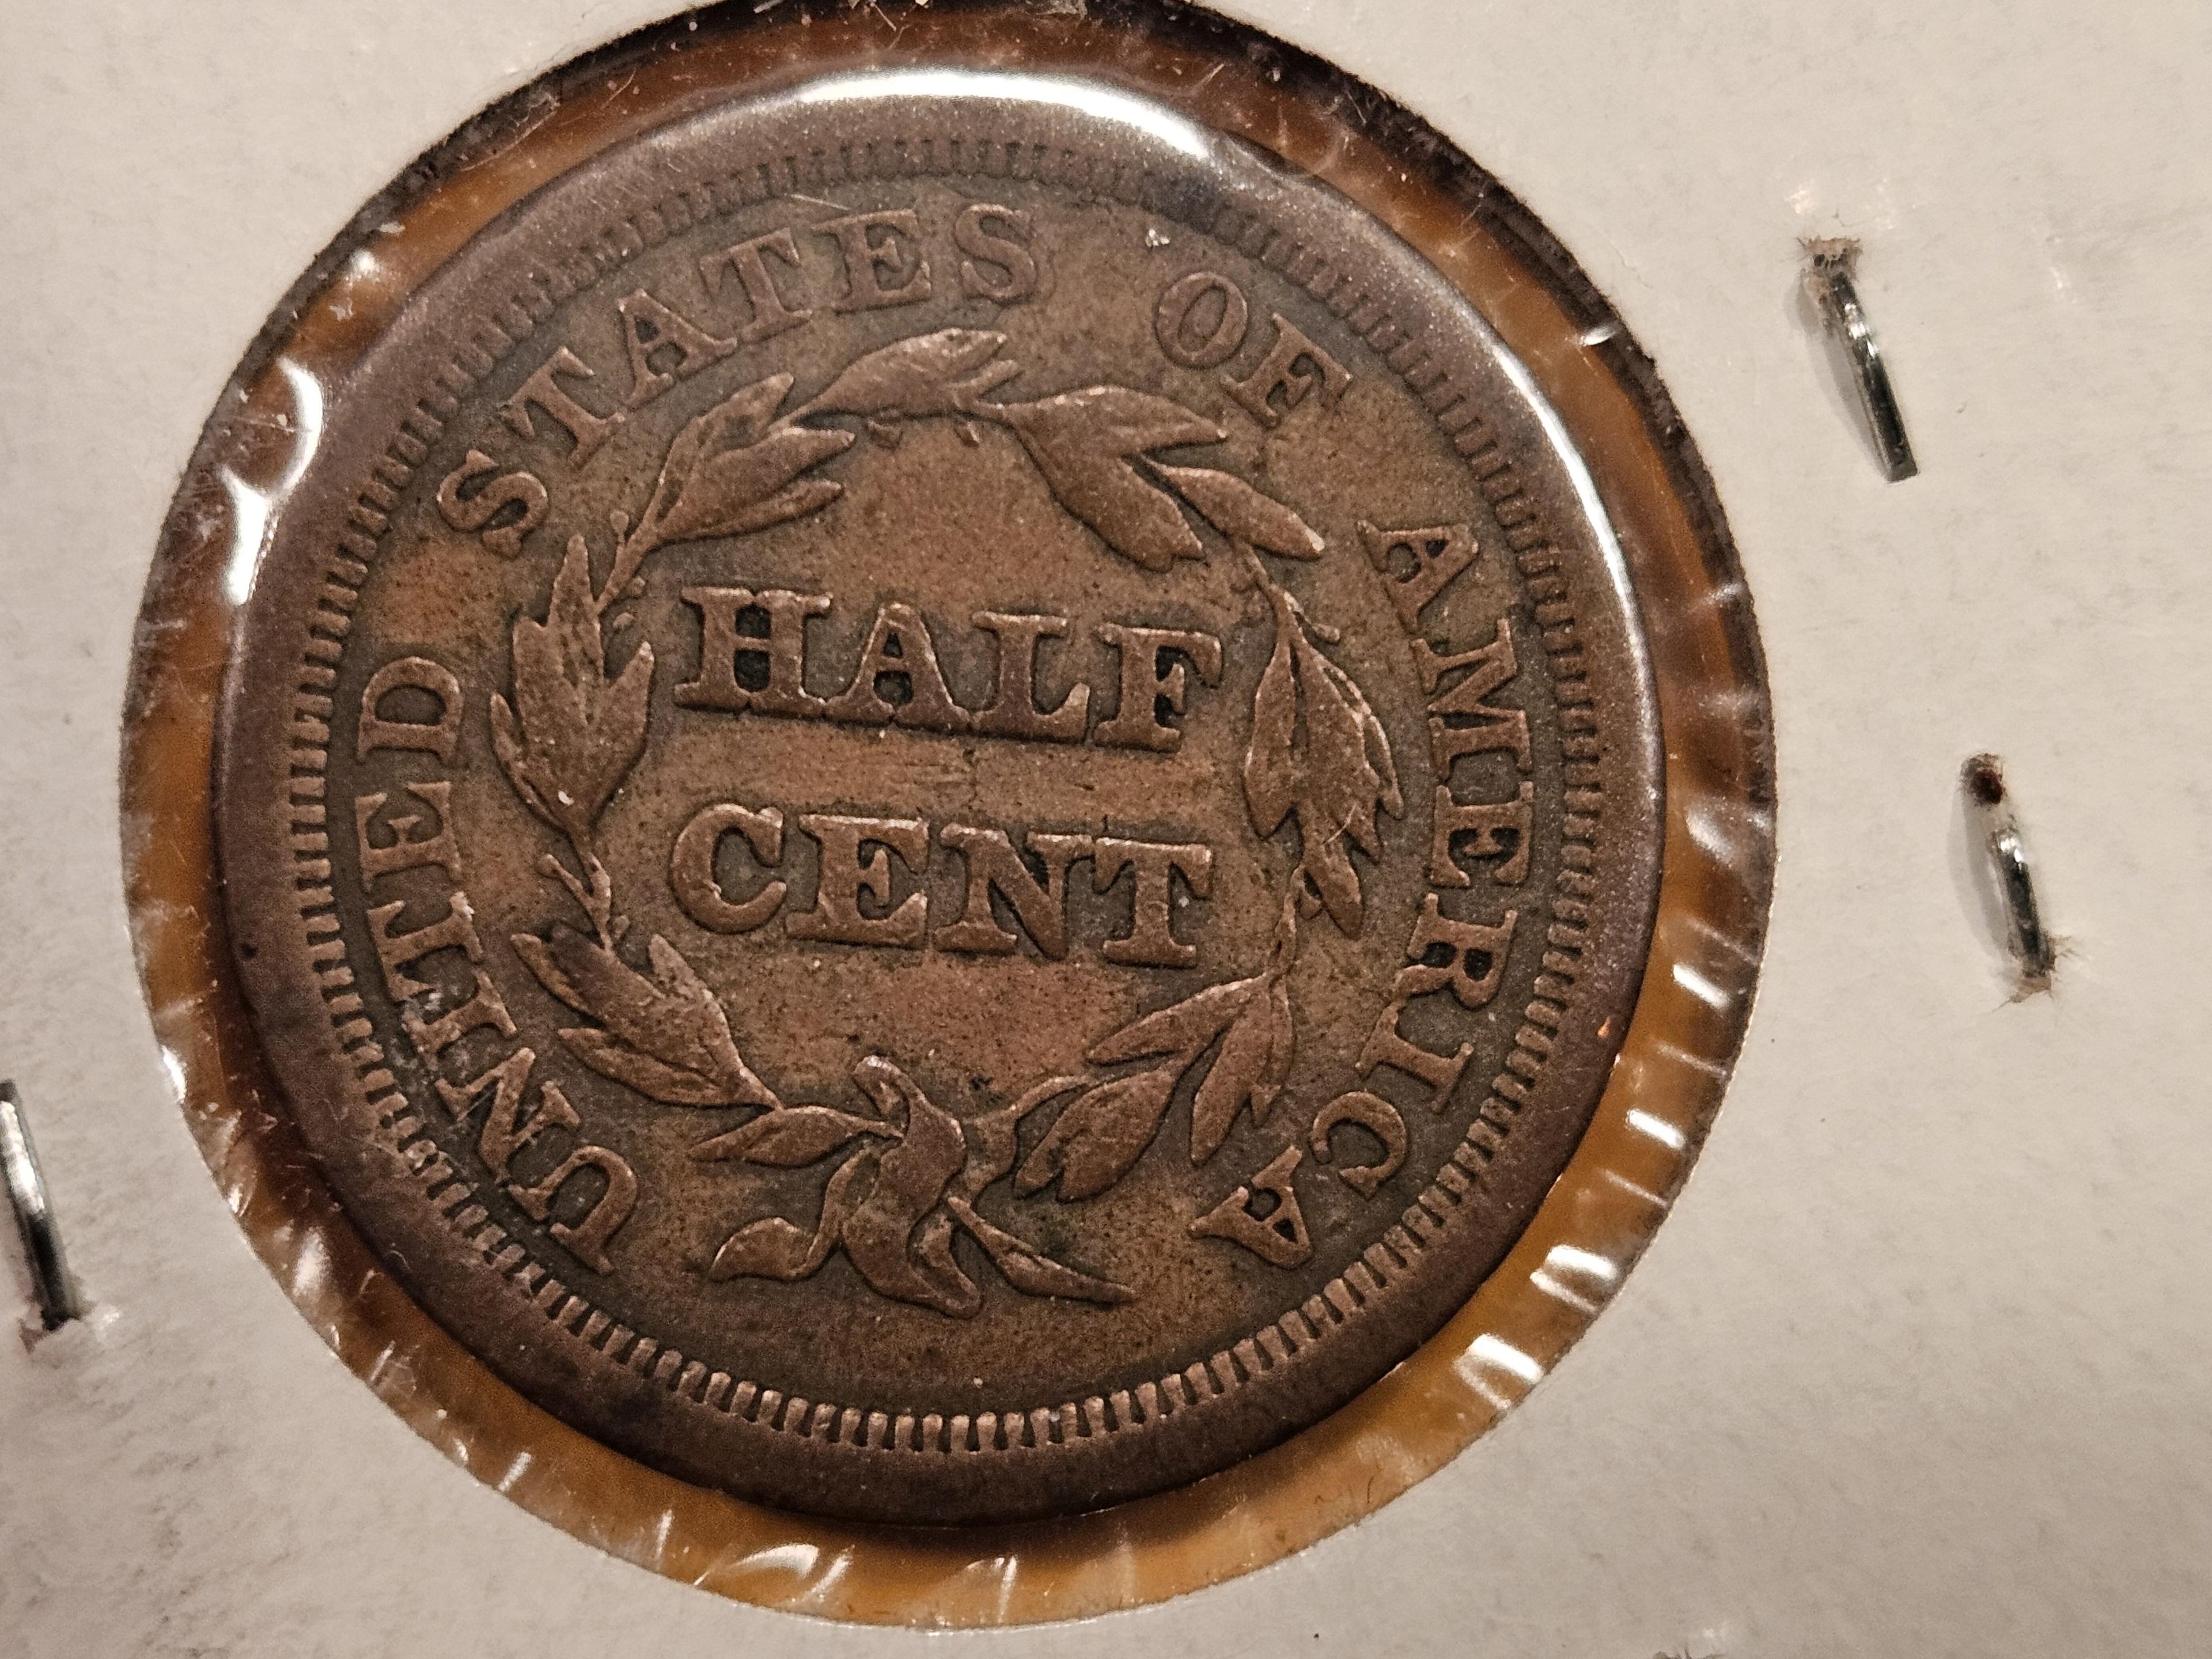 1851 Braided Hair Half Cent